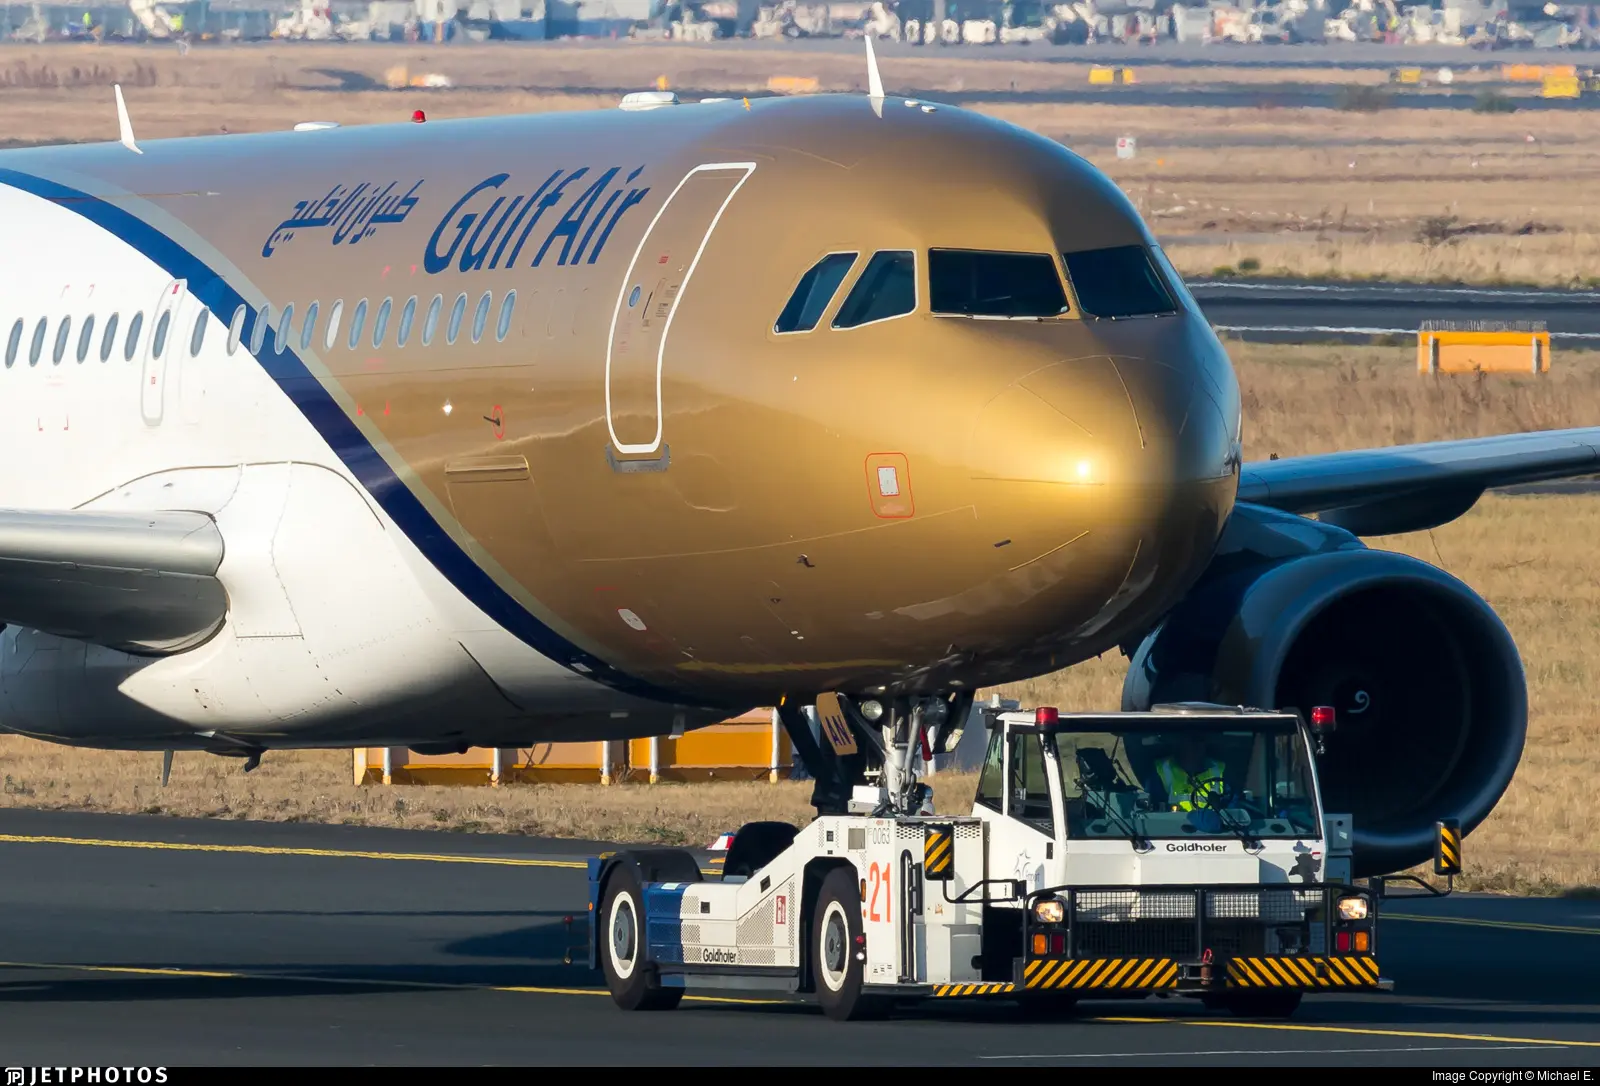 Gulf Air and El Al to launch direct Bahrain - Tel Aviv route